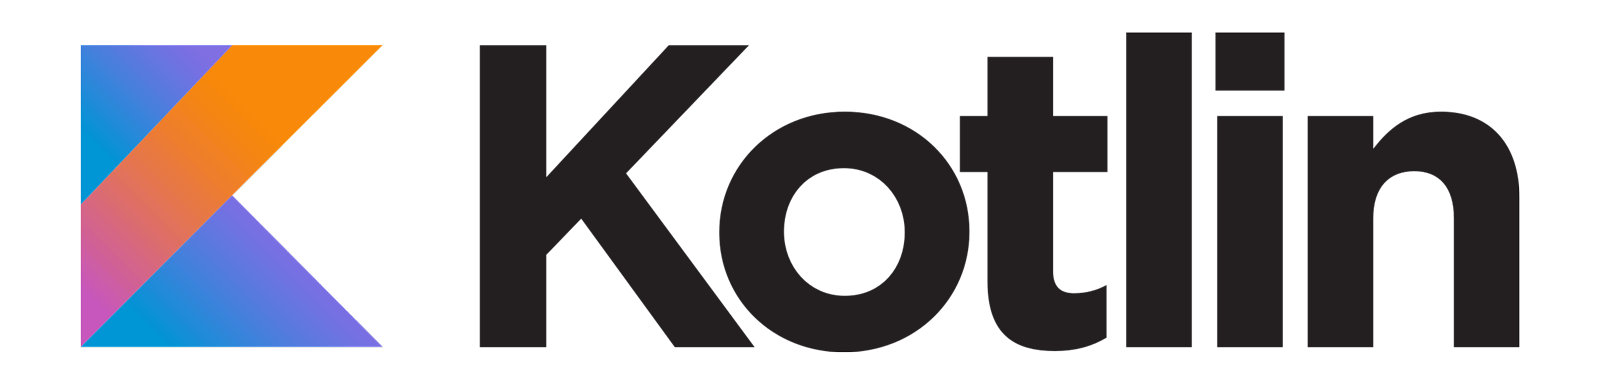 The best testing framework for Kotlin feature image